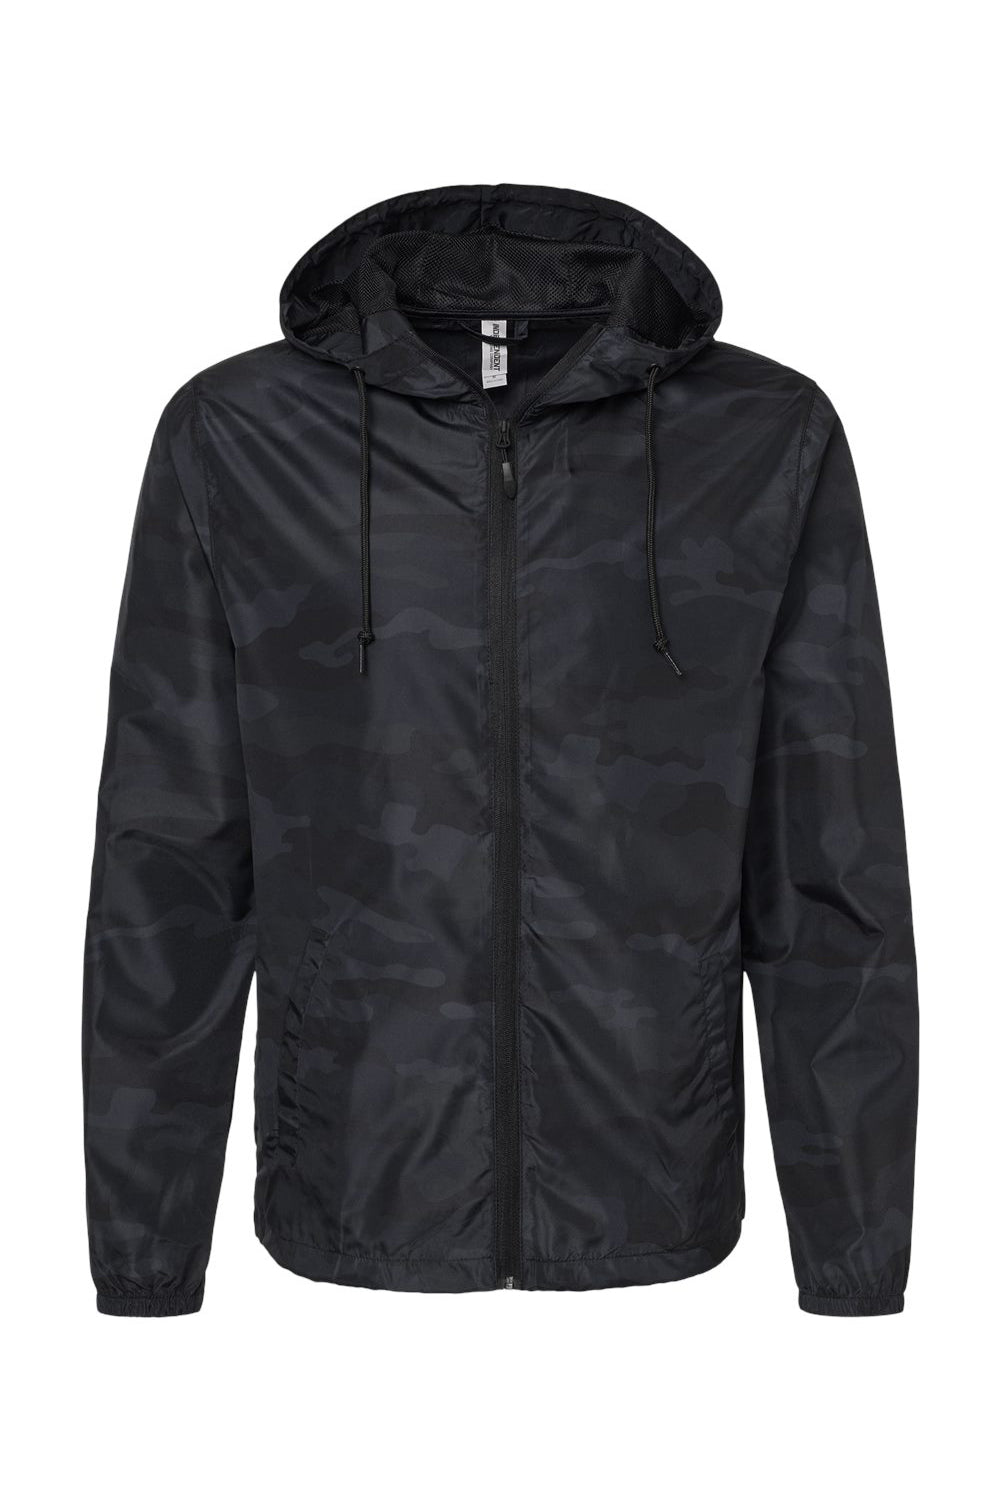 Independent Trading Co. EXP54LWZ Mens Full Zip Windbreaker Hooded Jacket Black Camo Flat Front